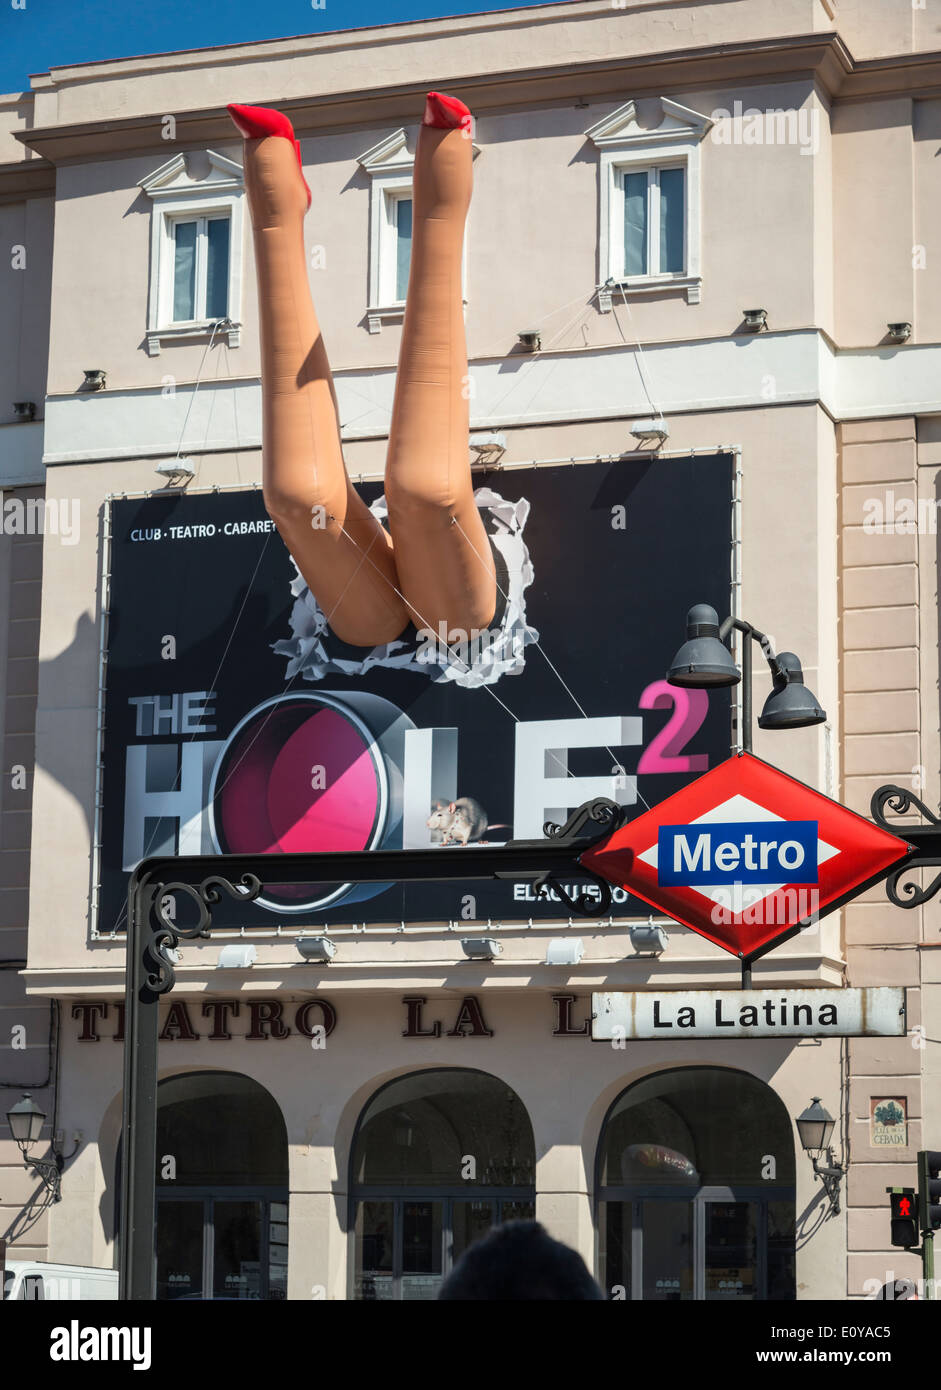 Cabaret show The Hole 2, playing at the Teatro La Latina next to La Latina Metro station, Madrid, Spain. Stock Photo